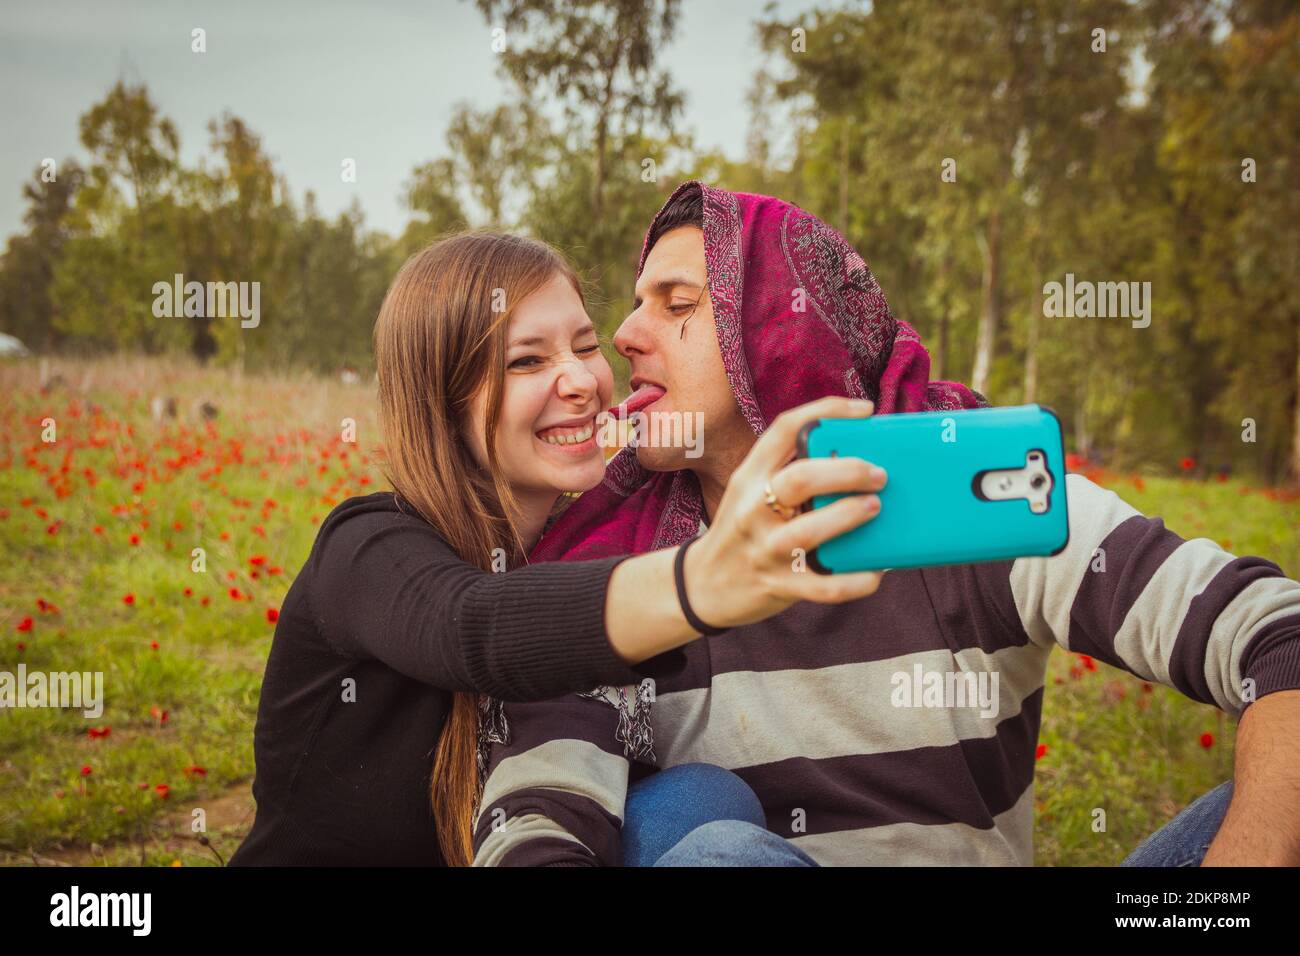 licking girlfriend selfie pics